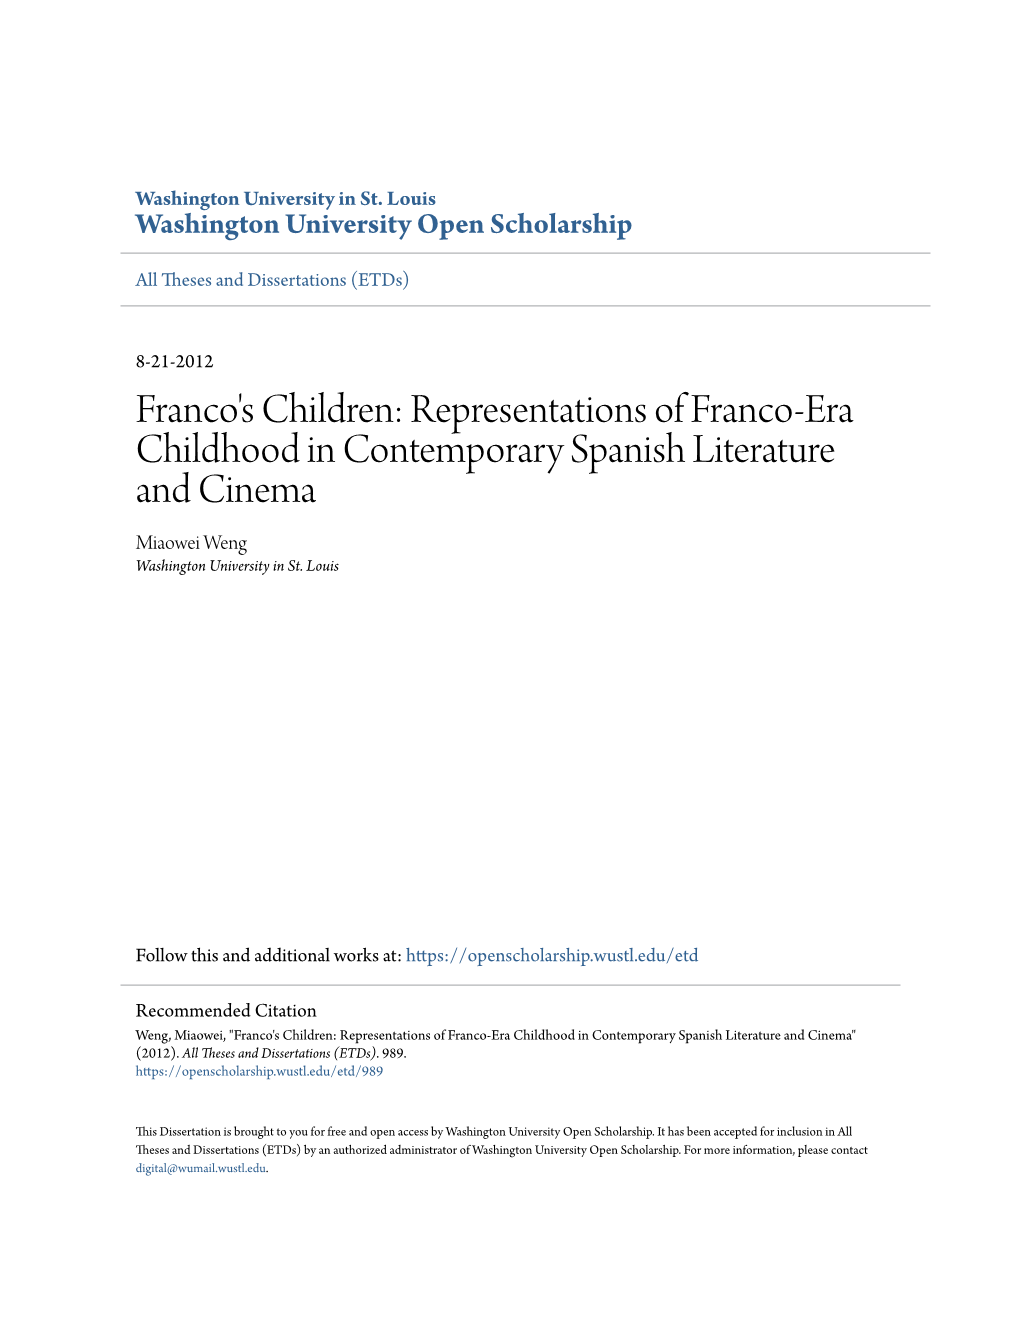 Franco's Children: Representations of Franco-Era Childhood in Contemporary Spanish Literature and Cinema Miaowei Weng Washington University in St